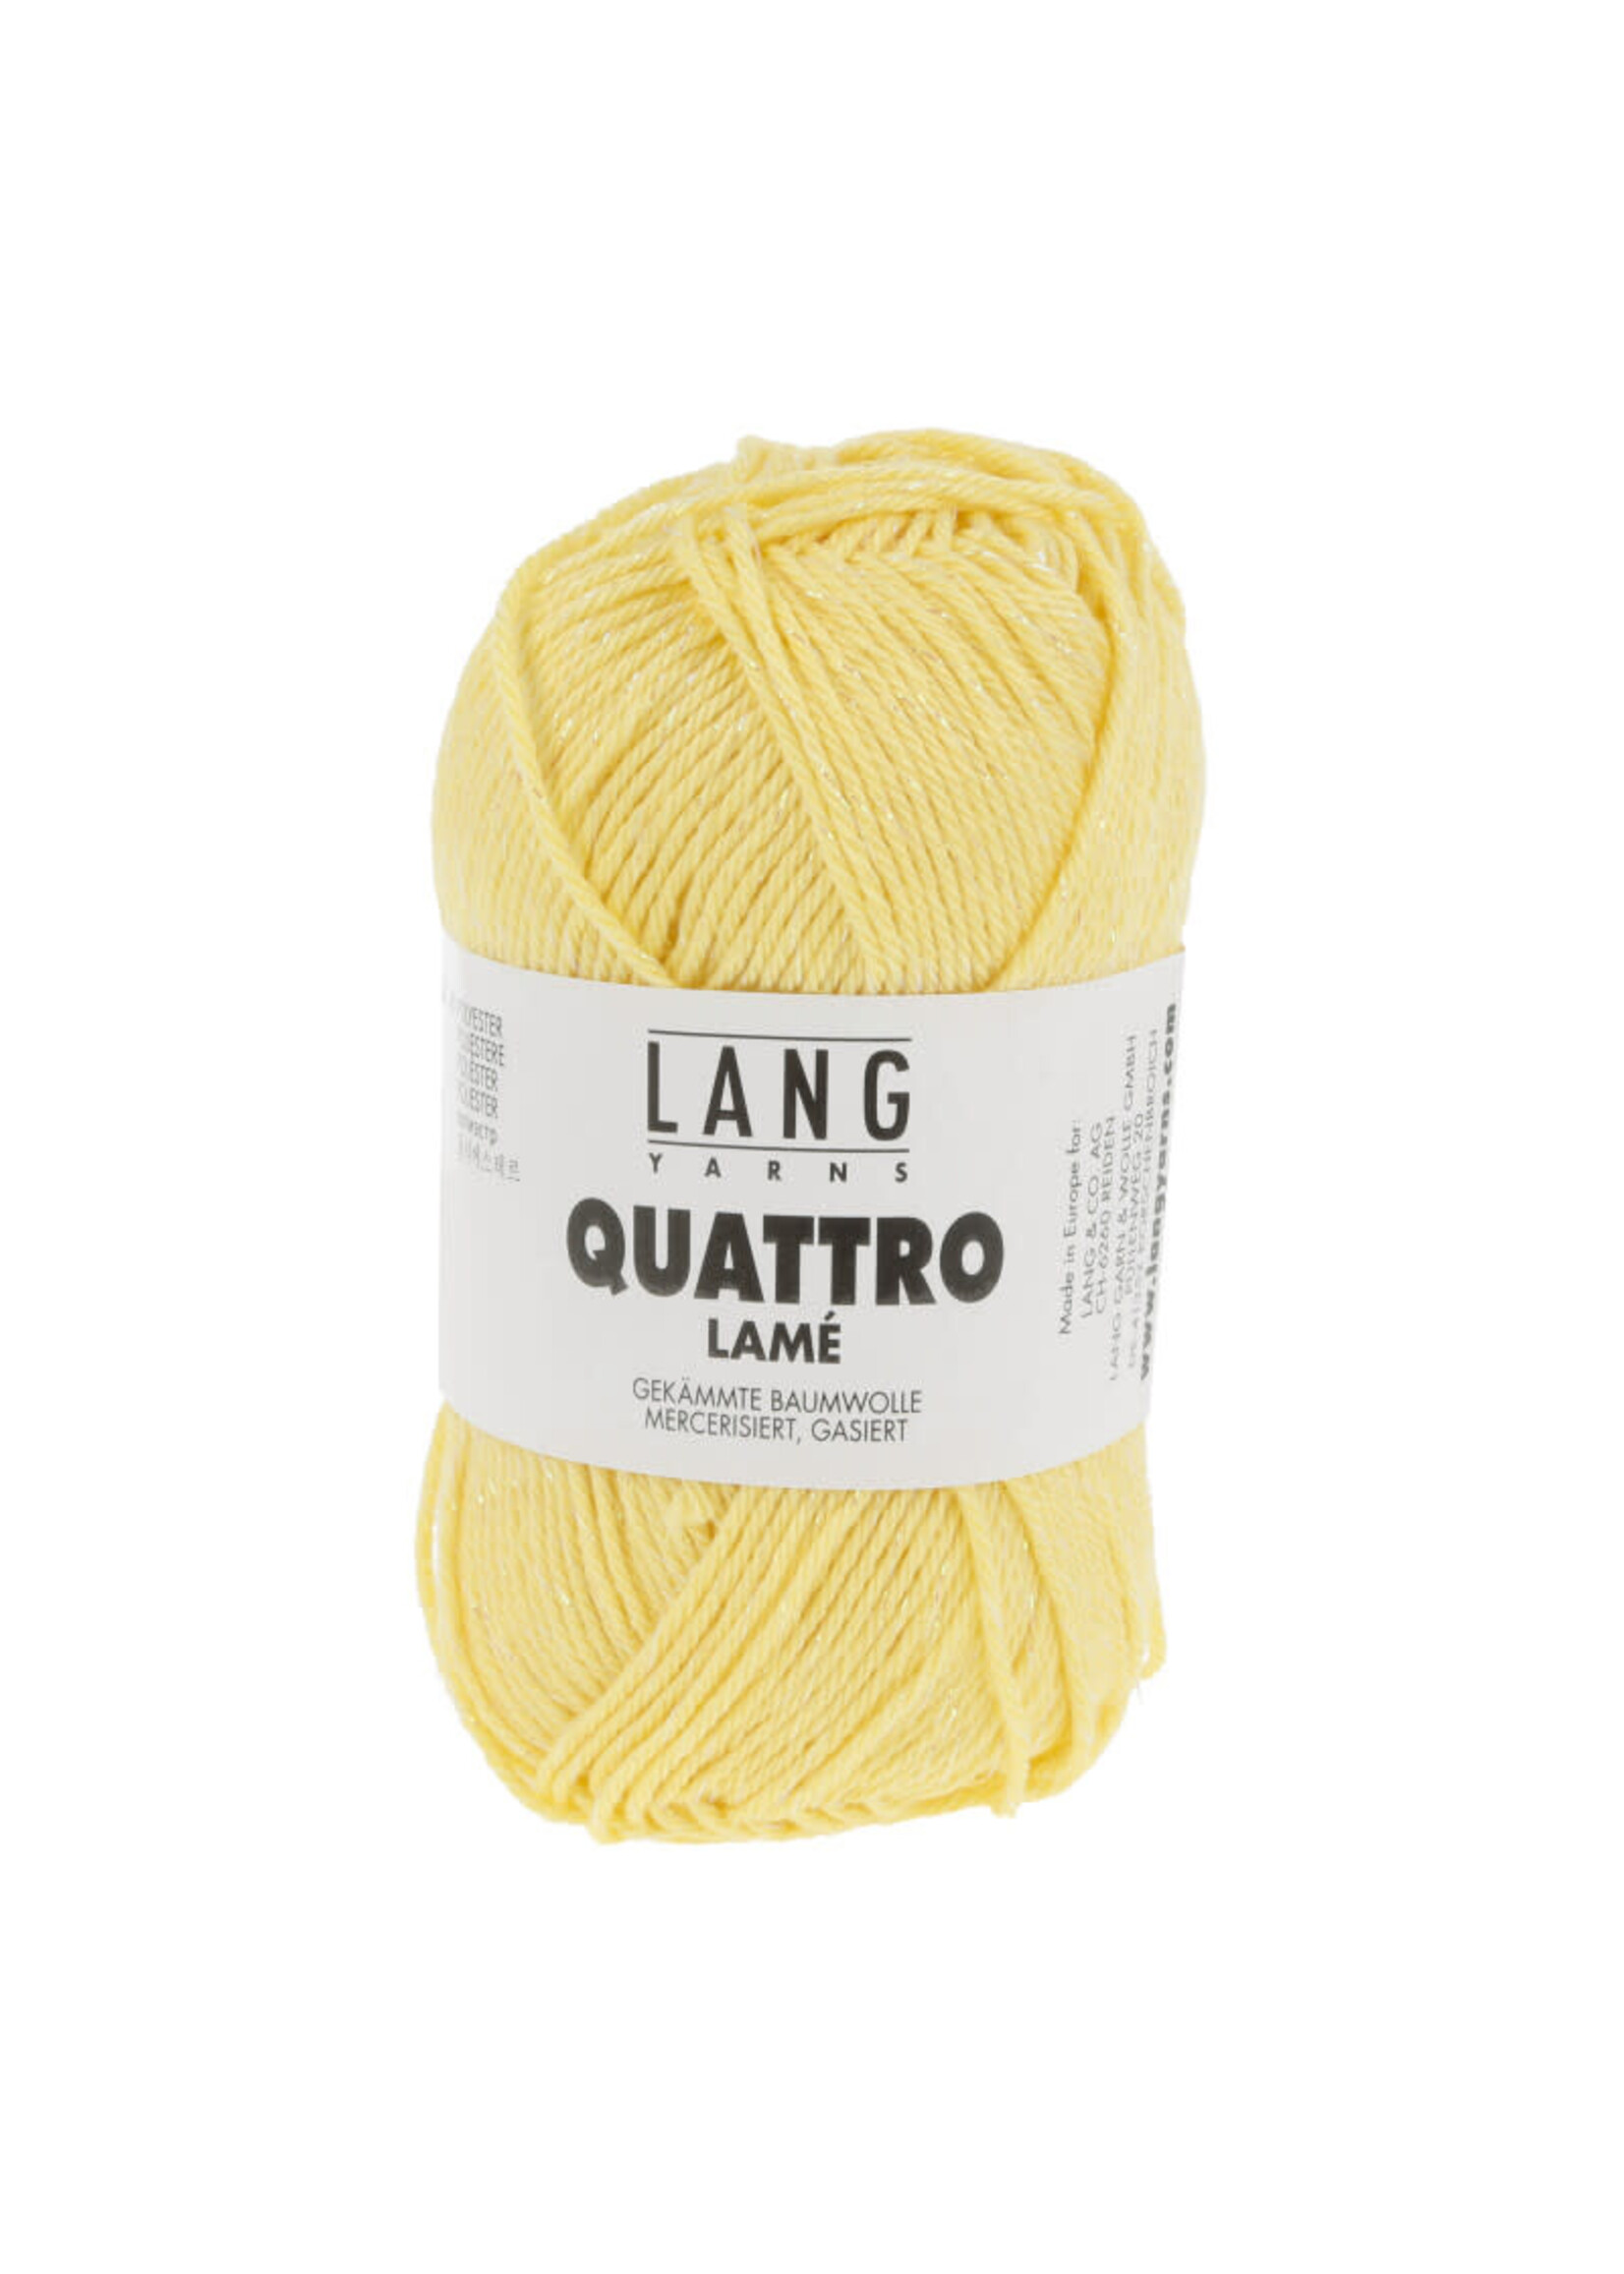 LangYarns Quattro Lamé - 0013 Geel